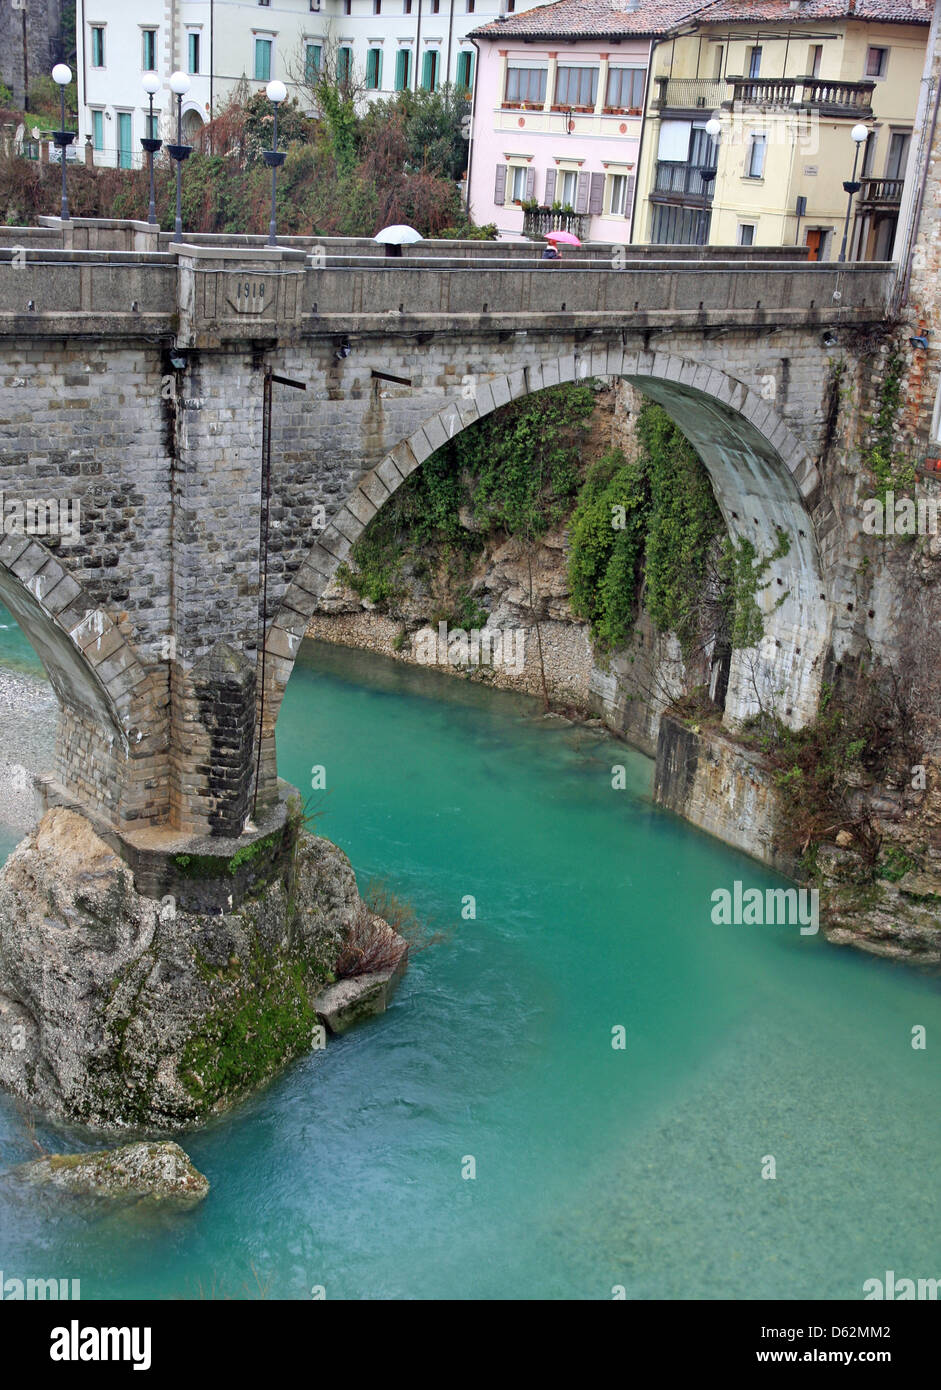 bridge of Devil on the NATISONE River that crosses the city of Cividale del friuli in Italy Stock Photo